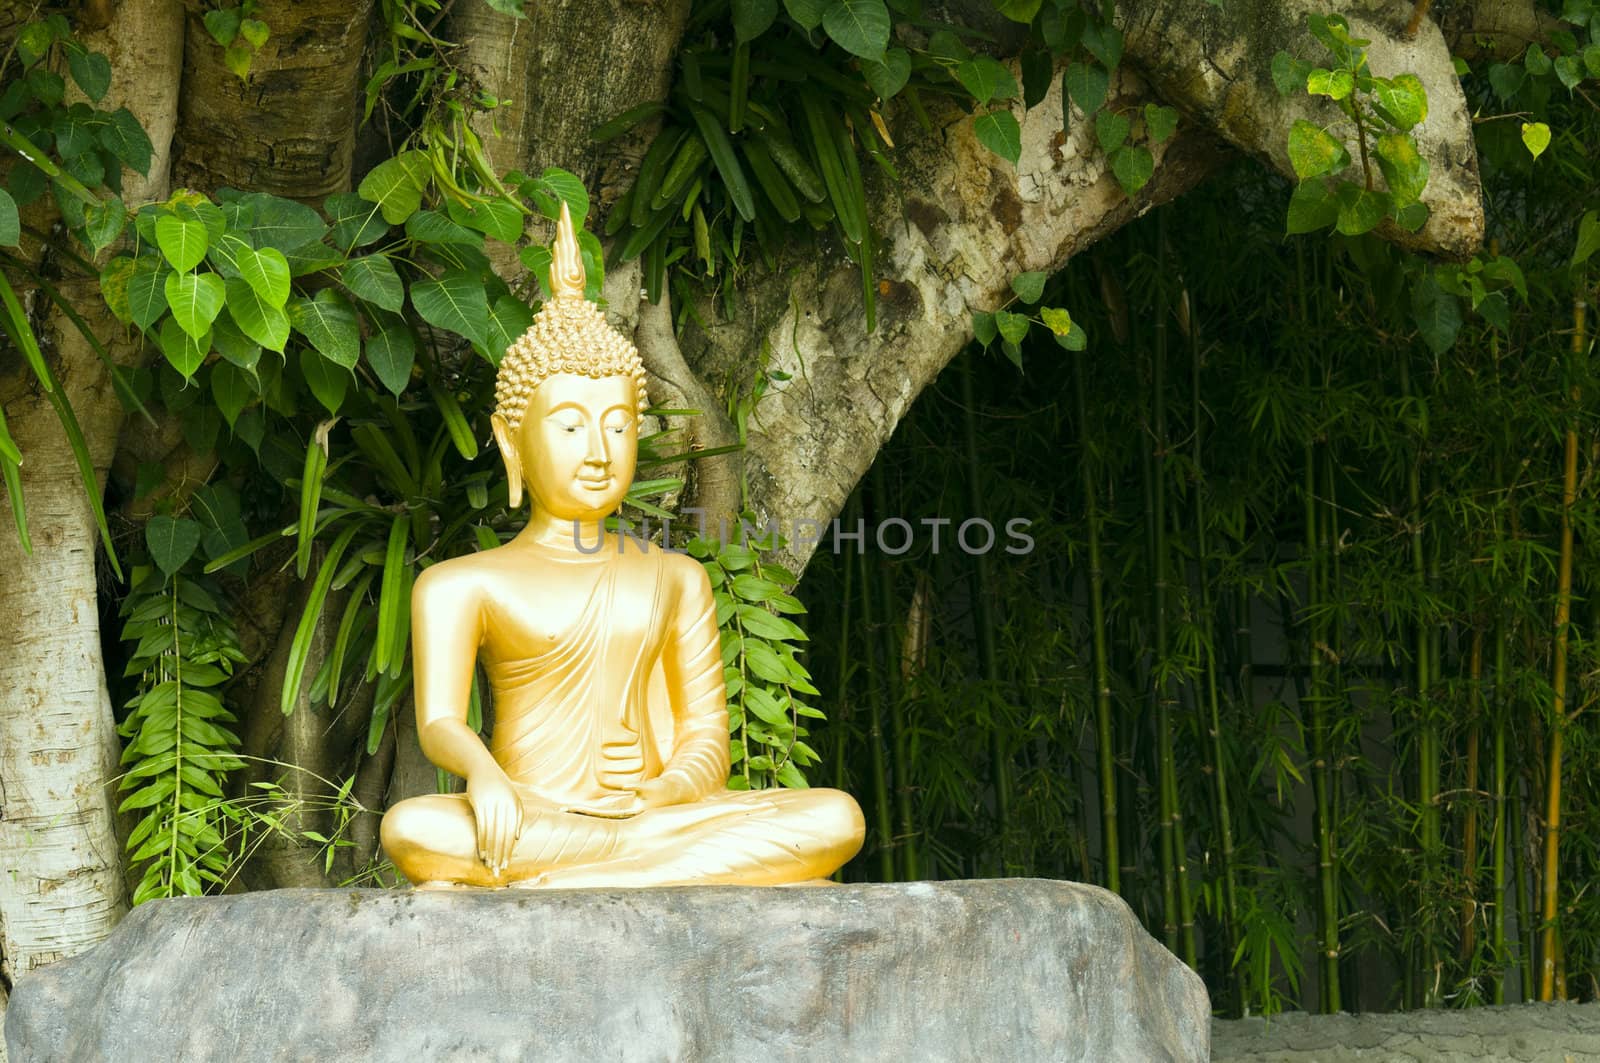 Golden Buddha statue under green tree in meditative posture